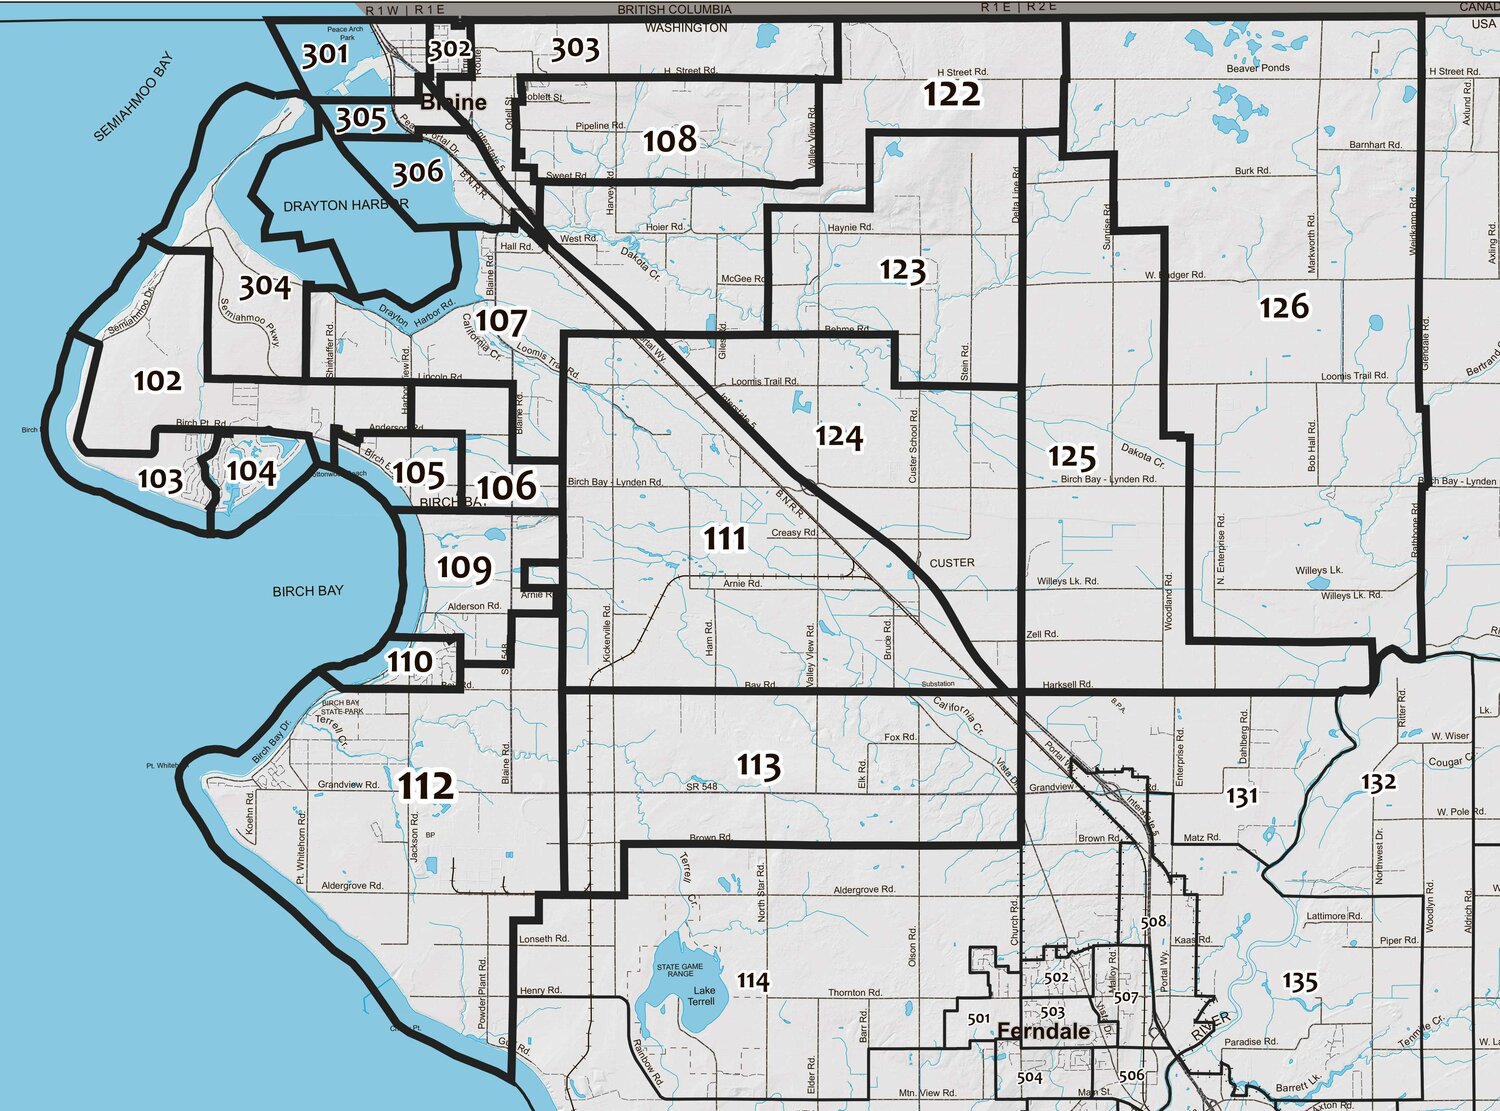 2023 precinct boundaries for the Blaine, Birch Bay and Custer area.